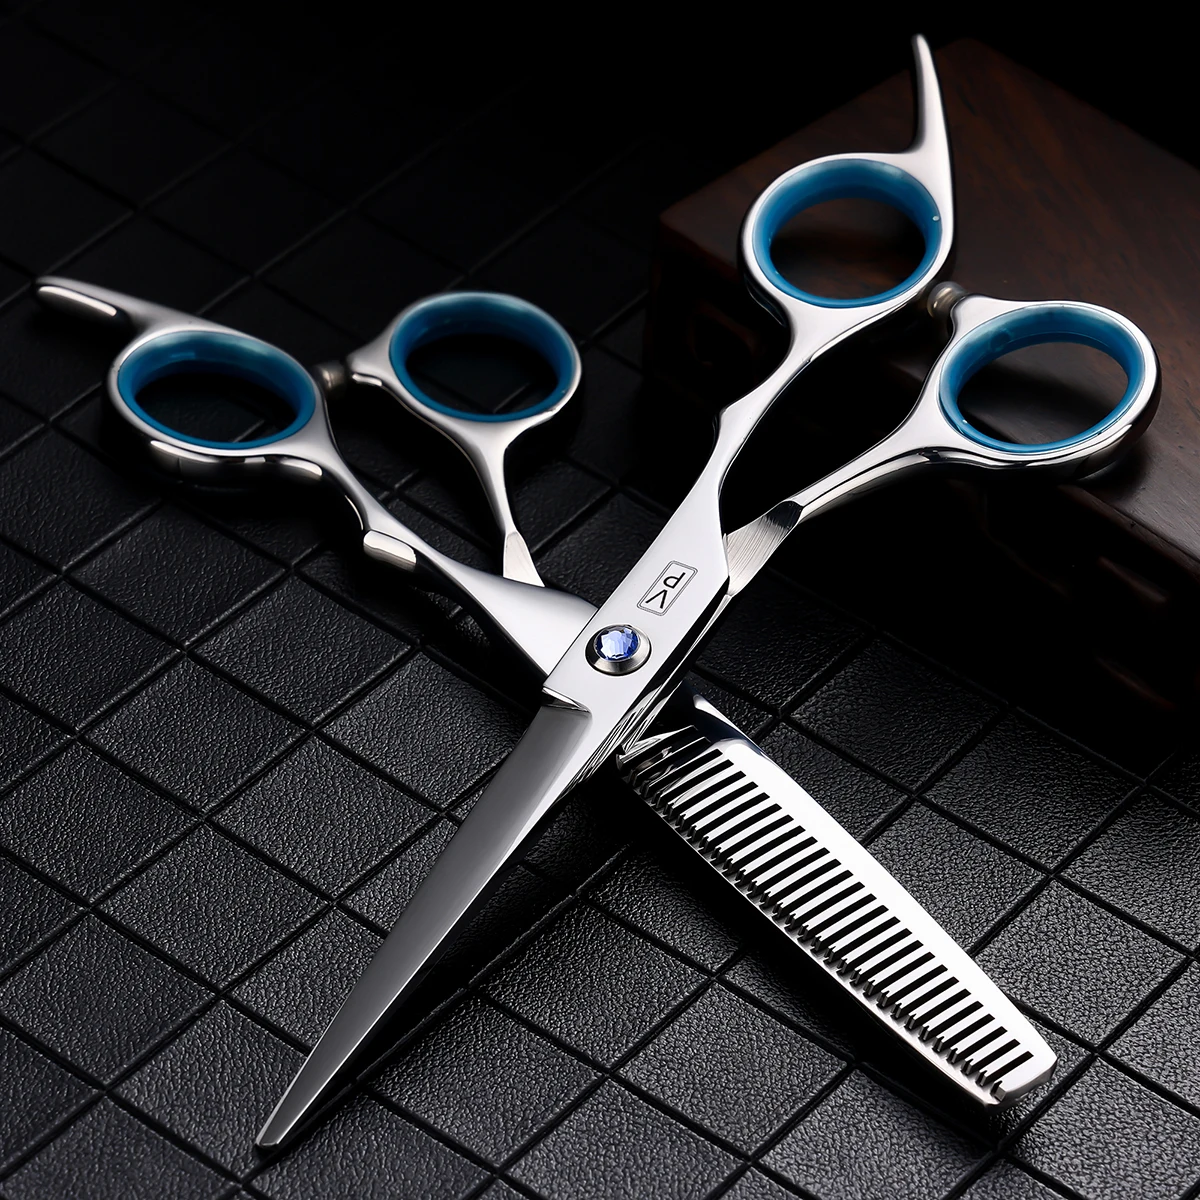 Hair Cutting Scissors Professional Sharp Barber Shears Salon Thinning / Texturizing Scissors 6 inch Hairdressing Scissors for Women Men Japanese